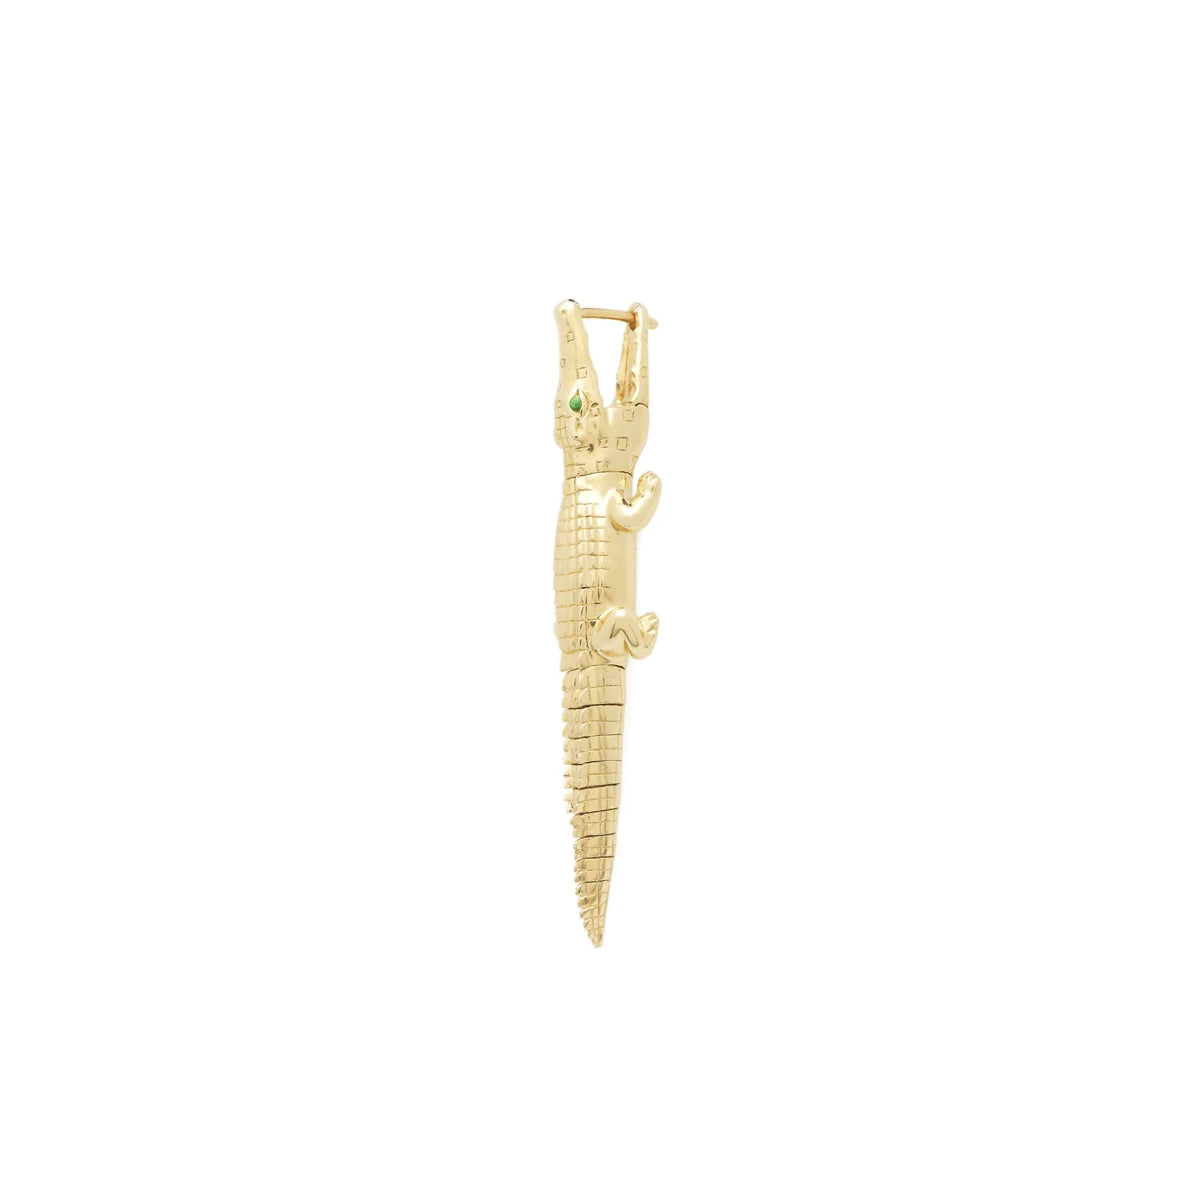 Gold Alligator Bite Earring - Bibi Van Der Velden - Ileana Makri store